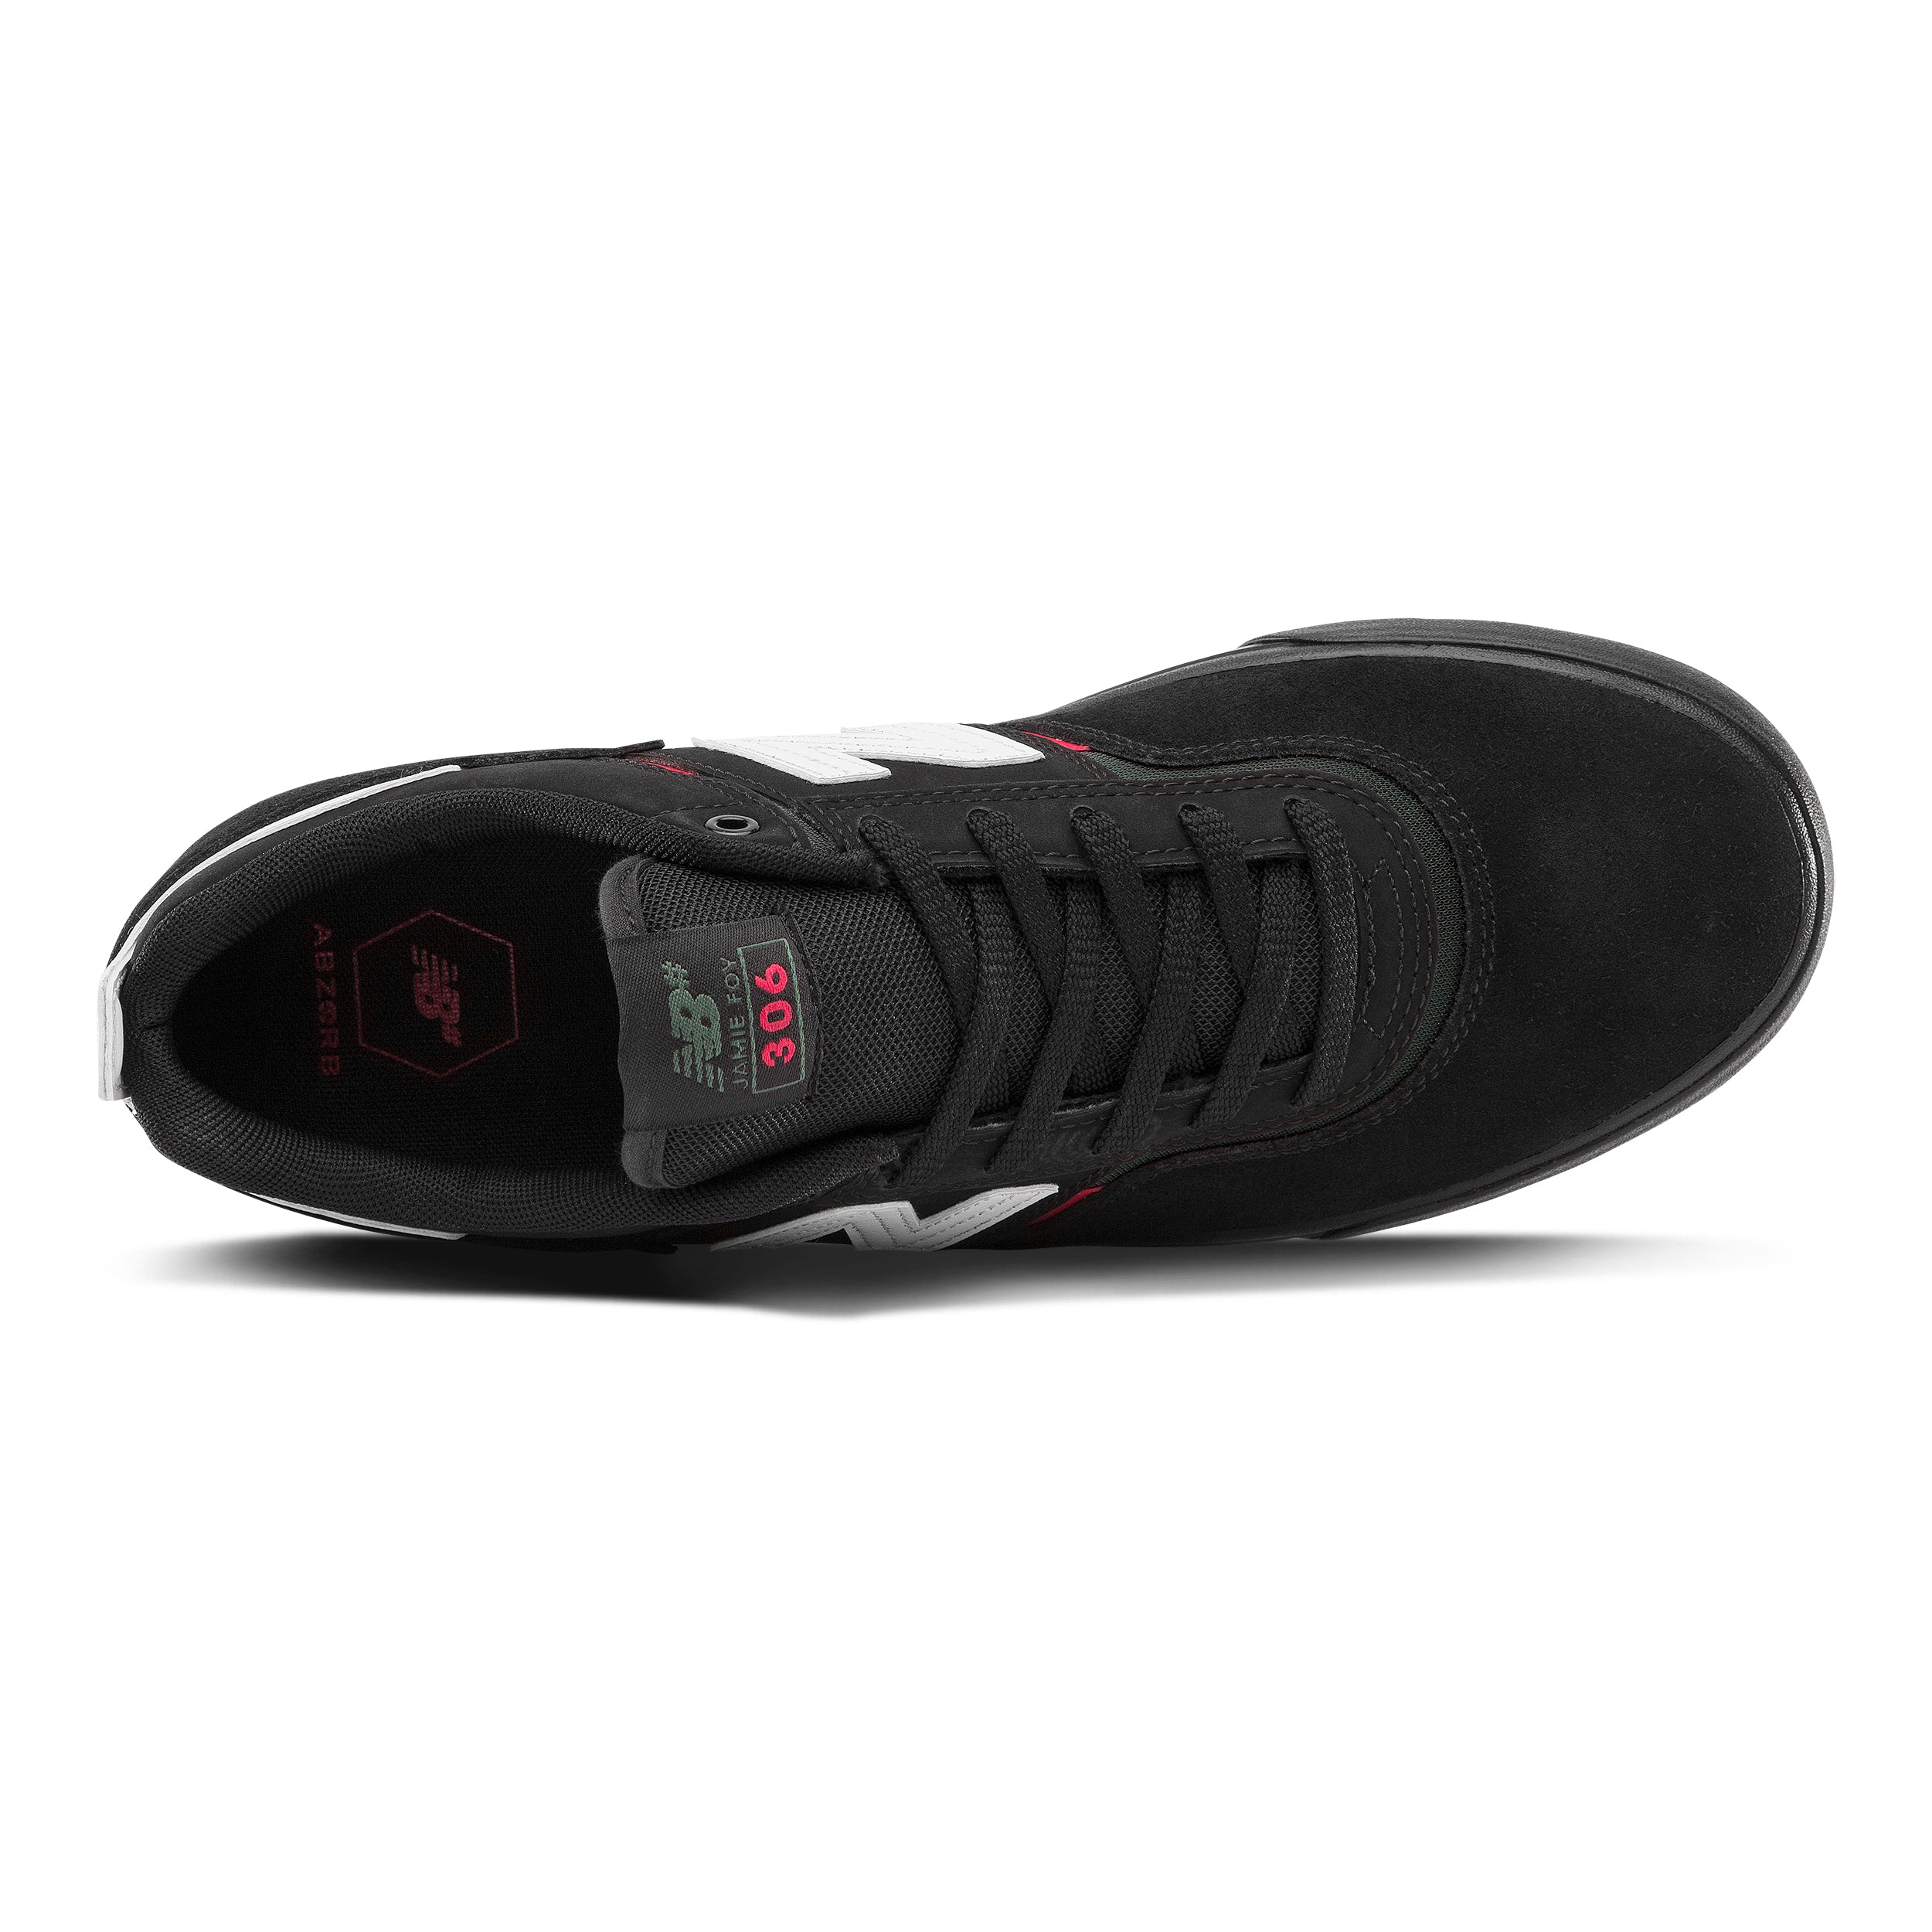 Black/Red NB Numeric NM306 Foy Skateboard Shoe Top